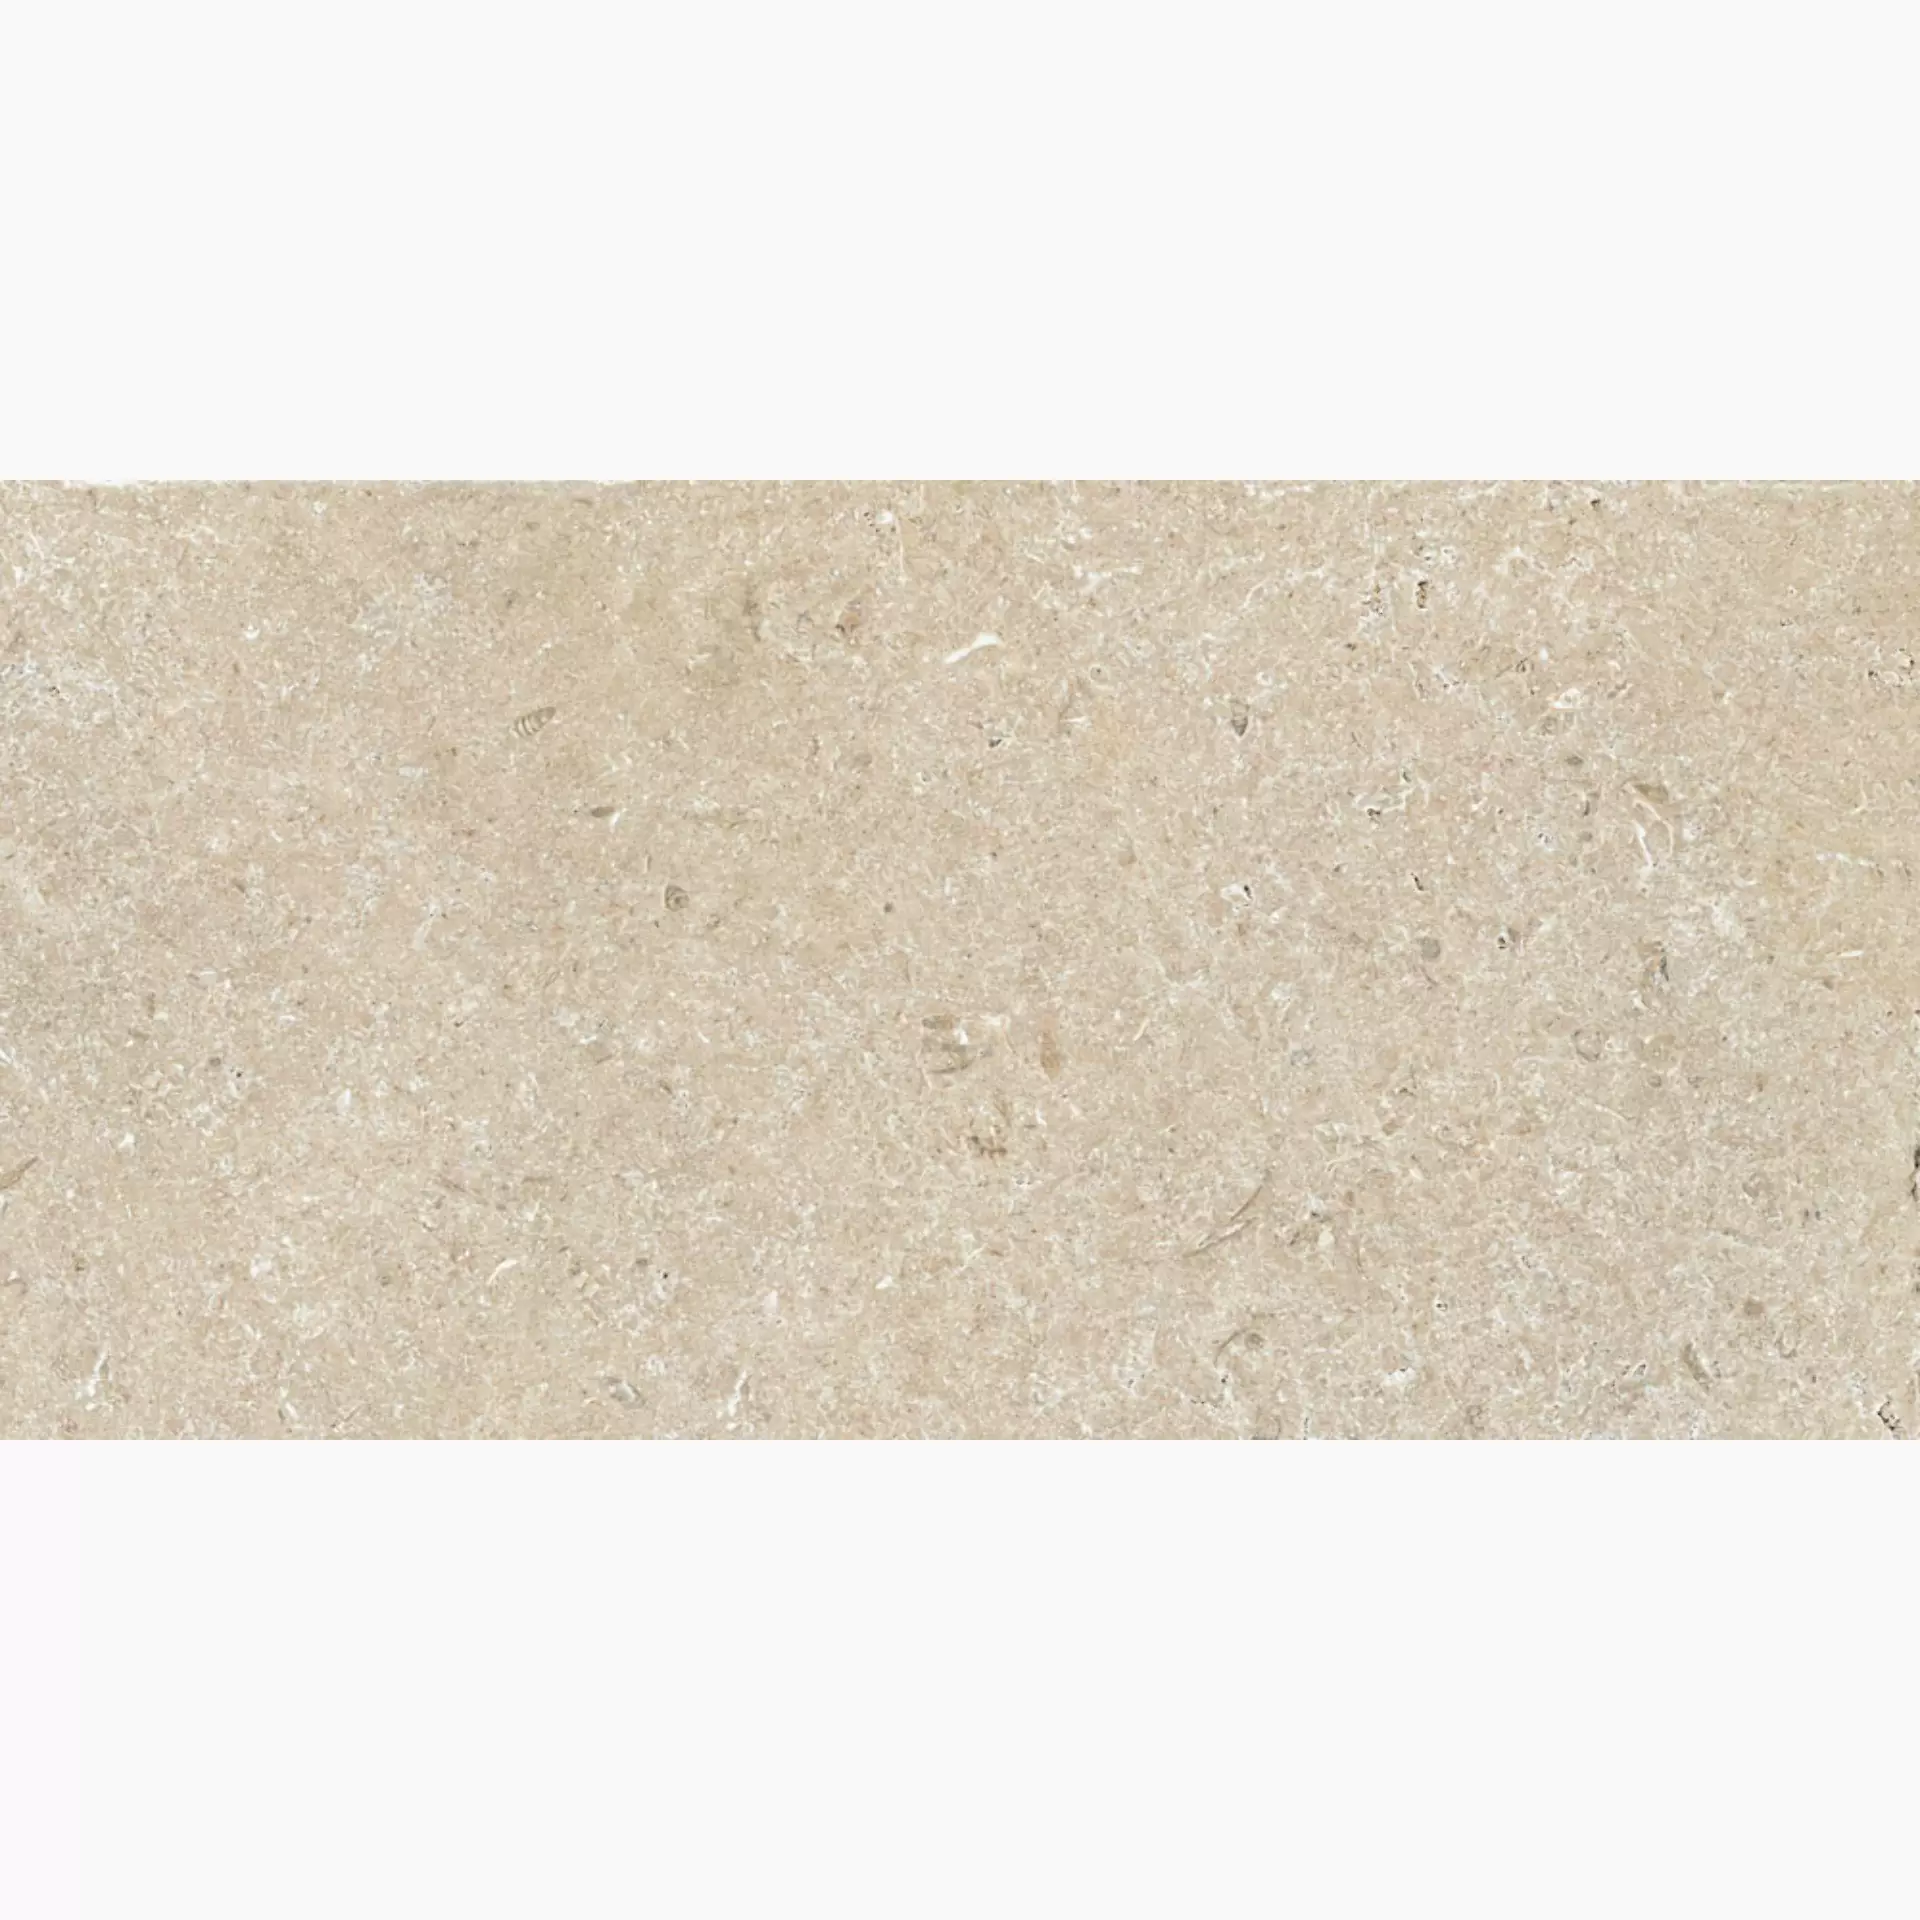 Cottodeste Secret Stone Precious Beige Honed Protect EGXSSX1 60x120cm rectified 14mm